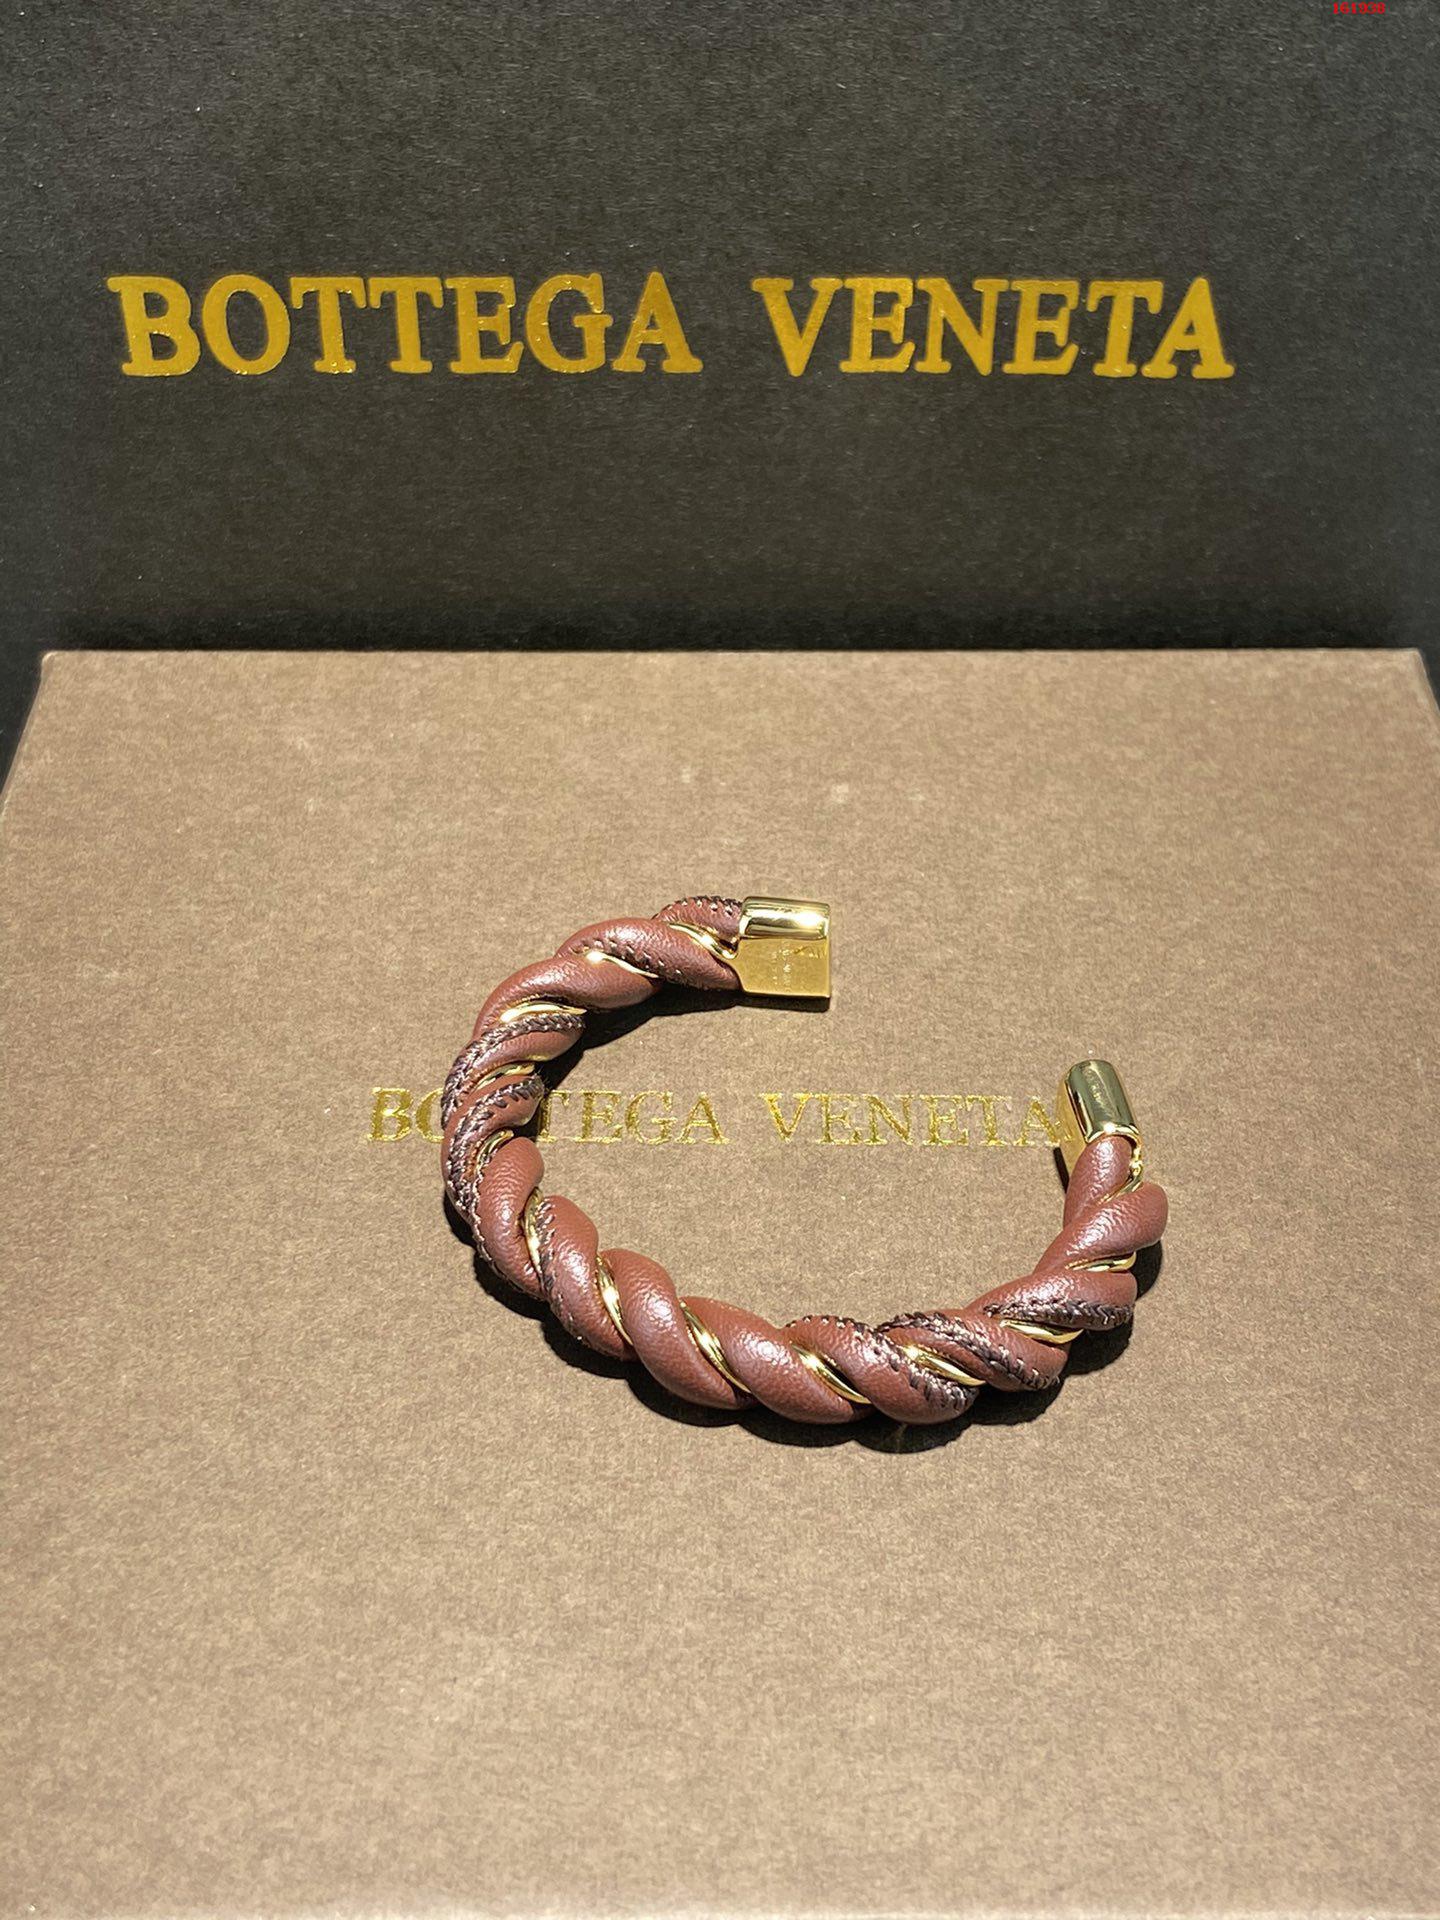 BottegaVeneta最近很火 高仿名牌手镯/手链 精仿名牌手镯/手链 原版名牌手镯/手链 A货名牌手镯/手链 原单名牌手镯/手链 